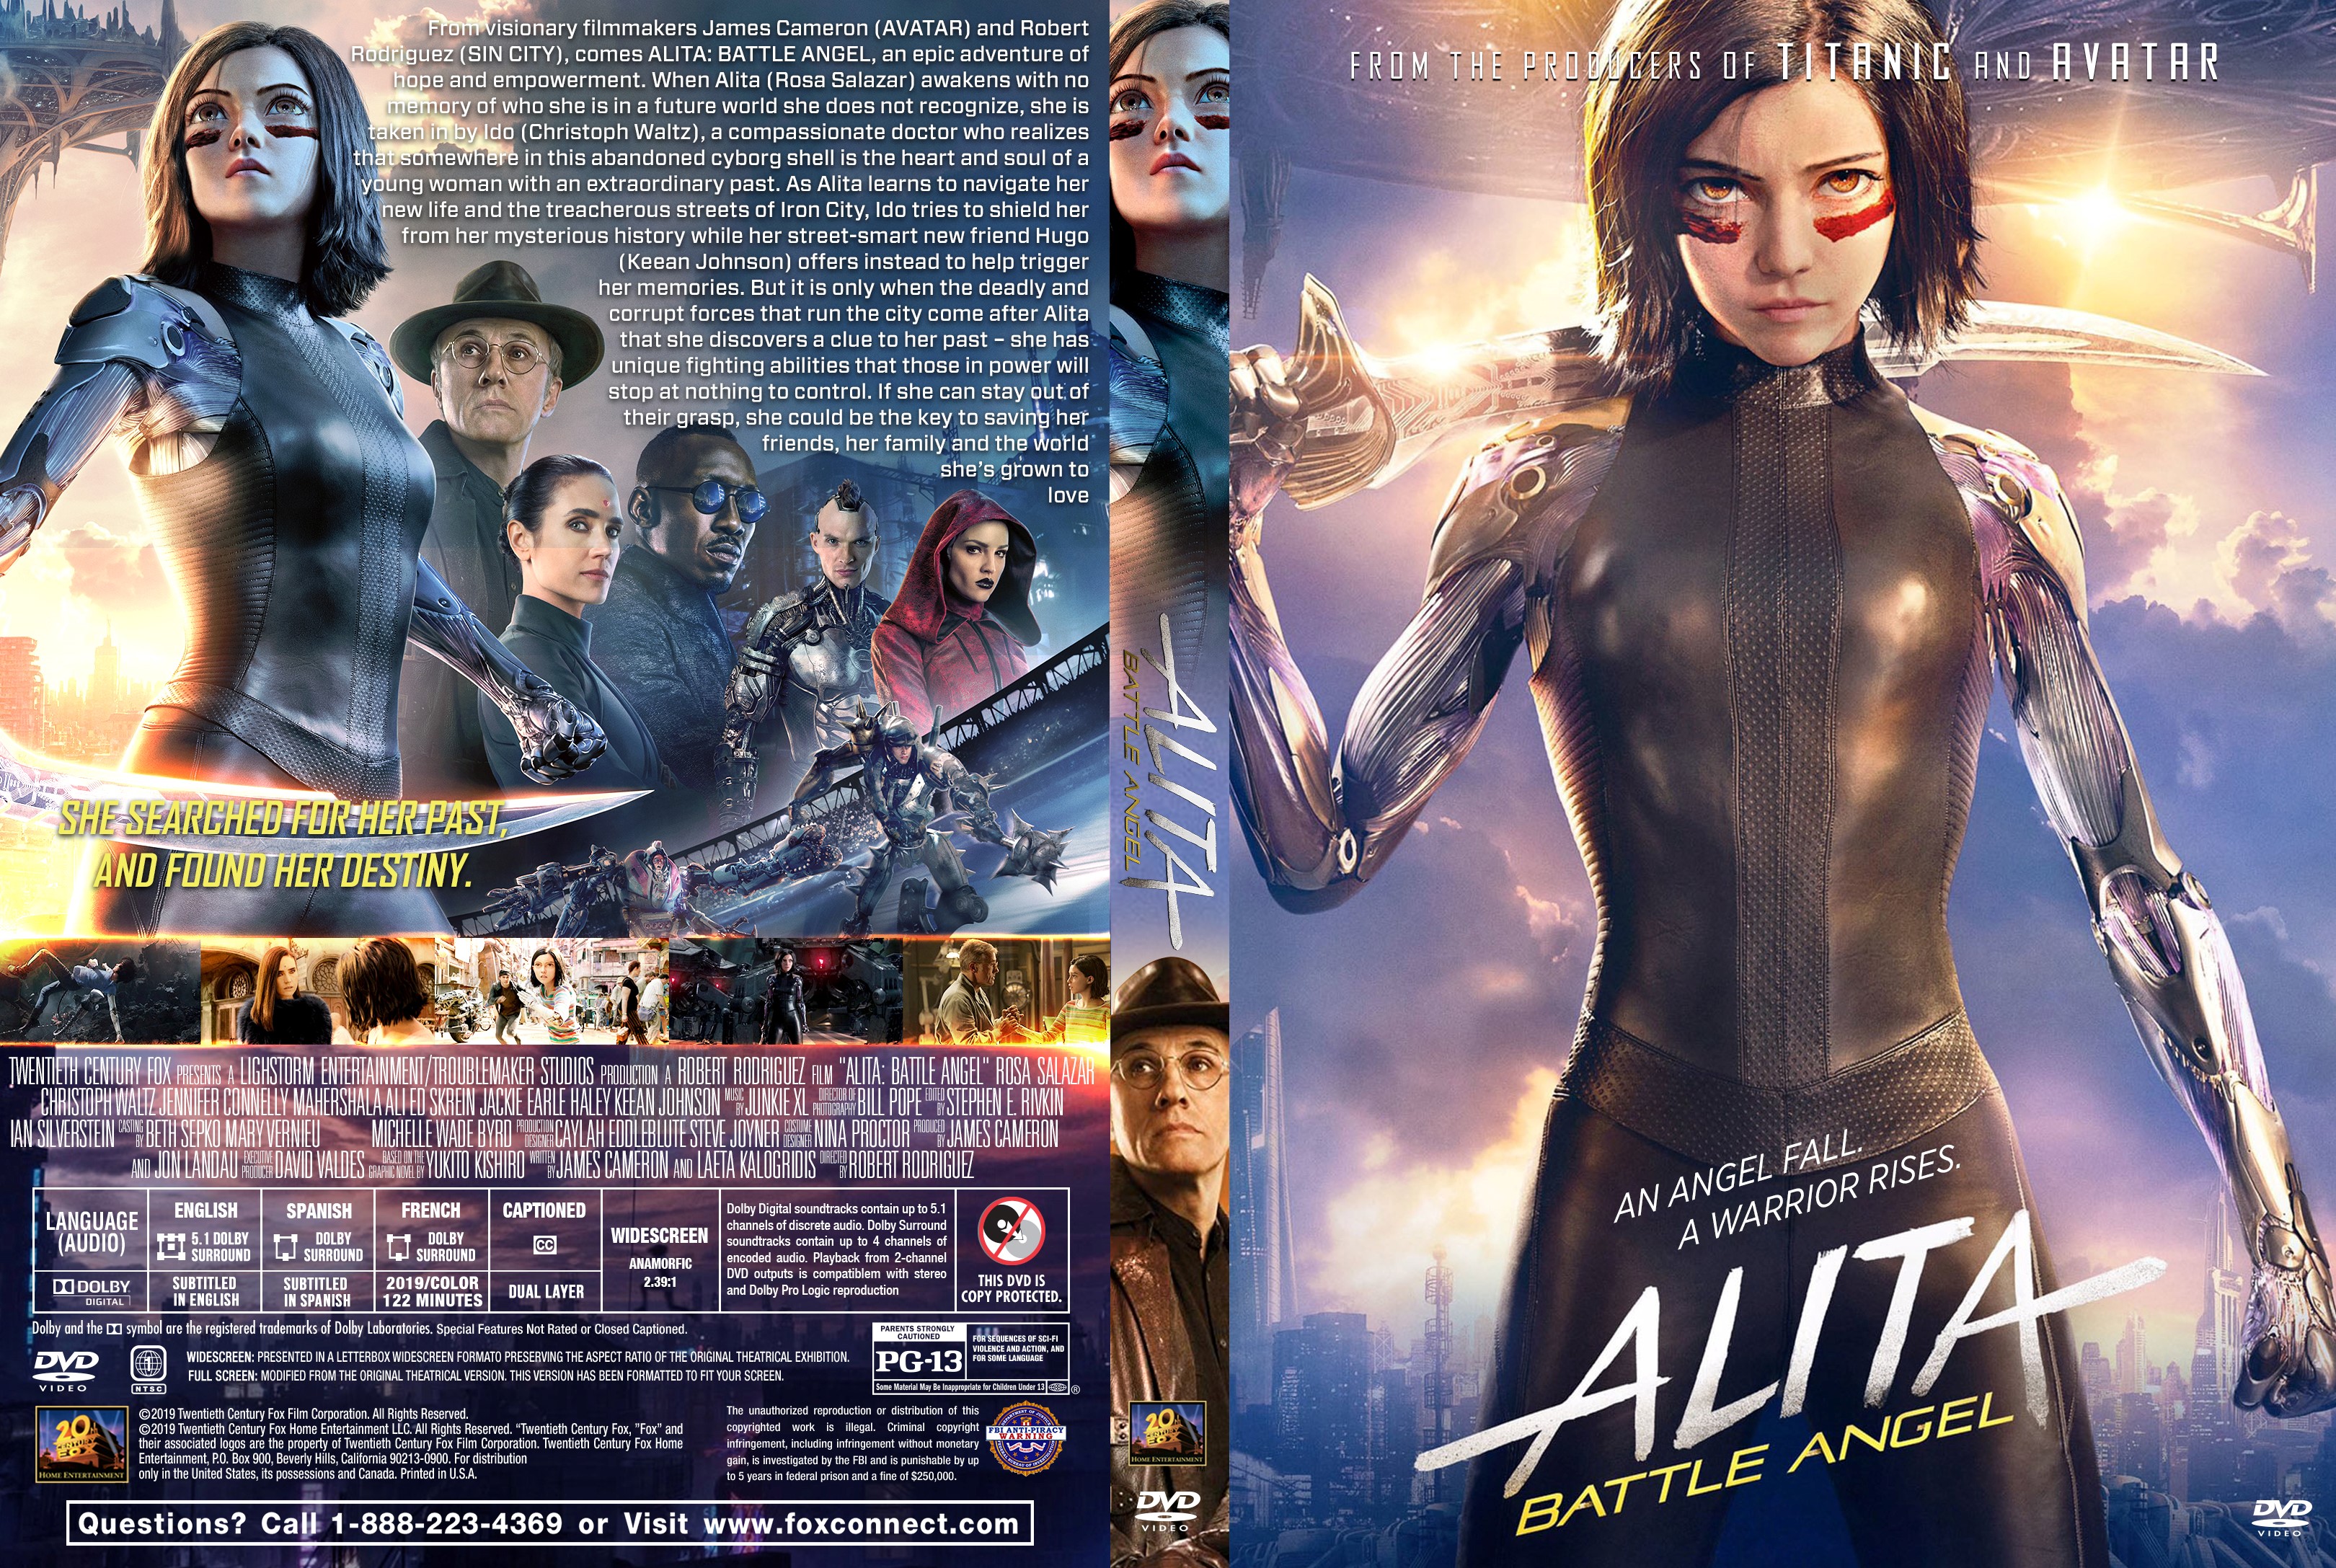  ::: Alita Battle Angel - high quality DVD / Blueray / Movie